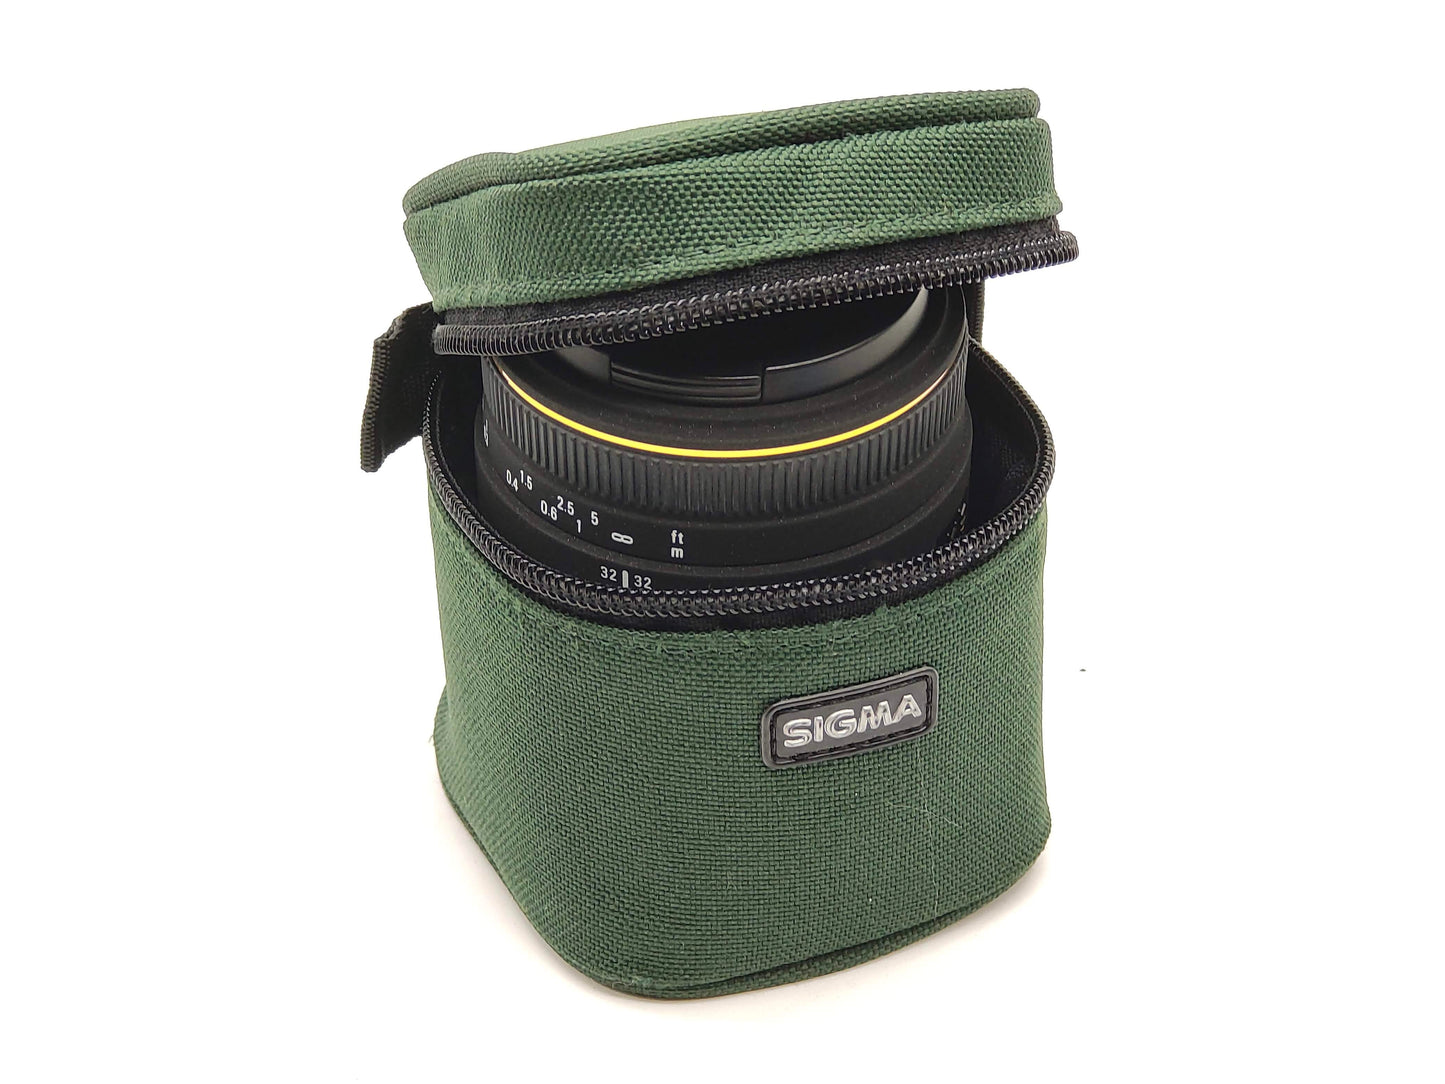 Sigma 50mm f/2.8 DG Macro lens for Nikon Autofocus SLRs. As new condition.